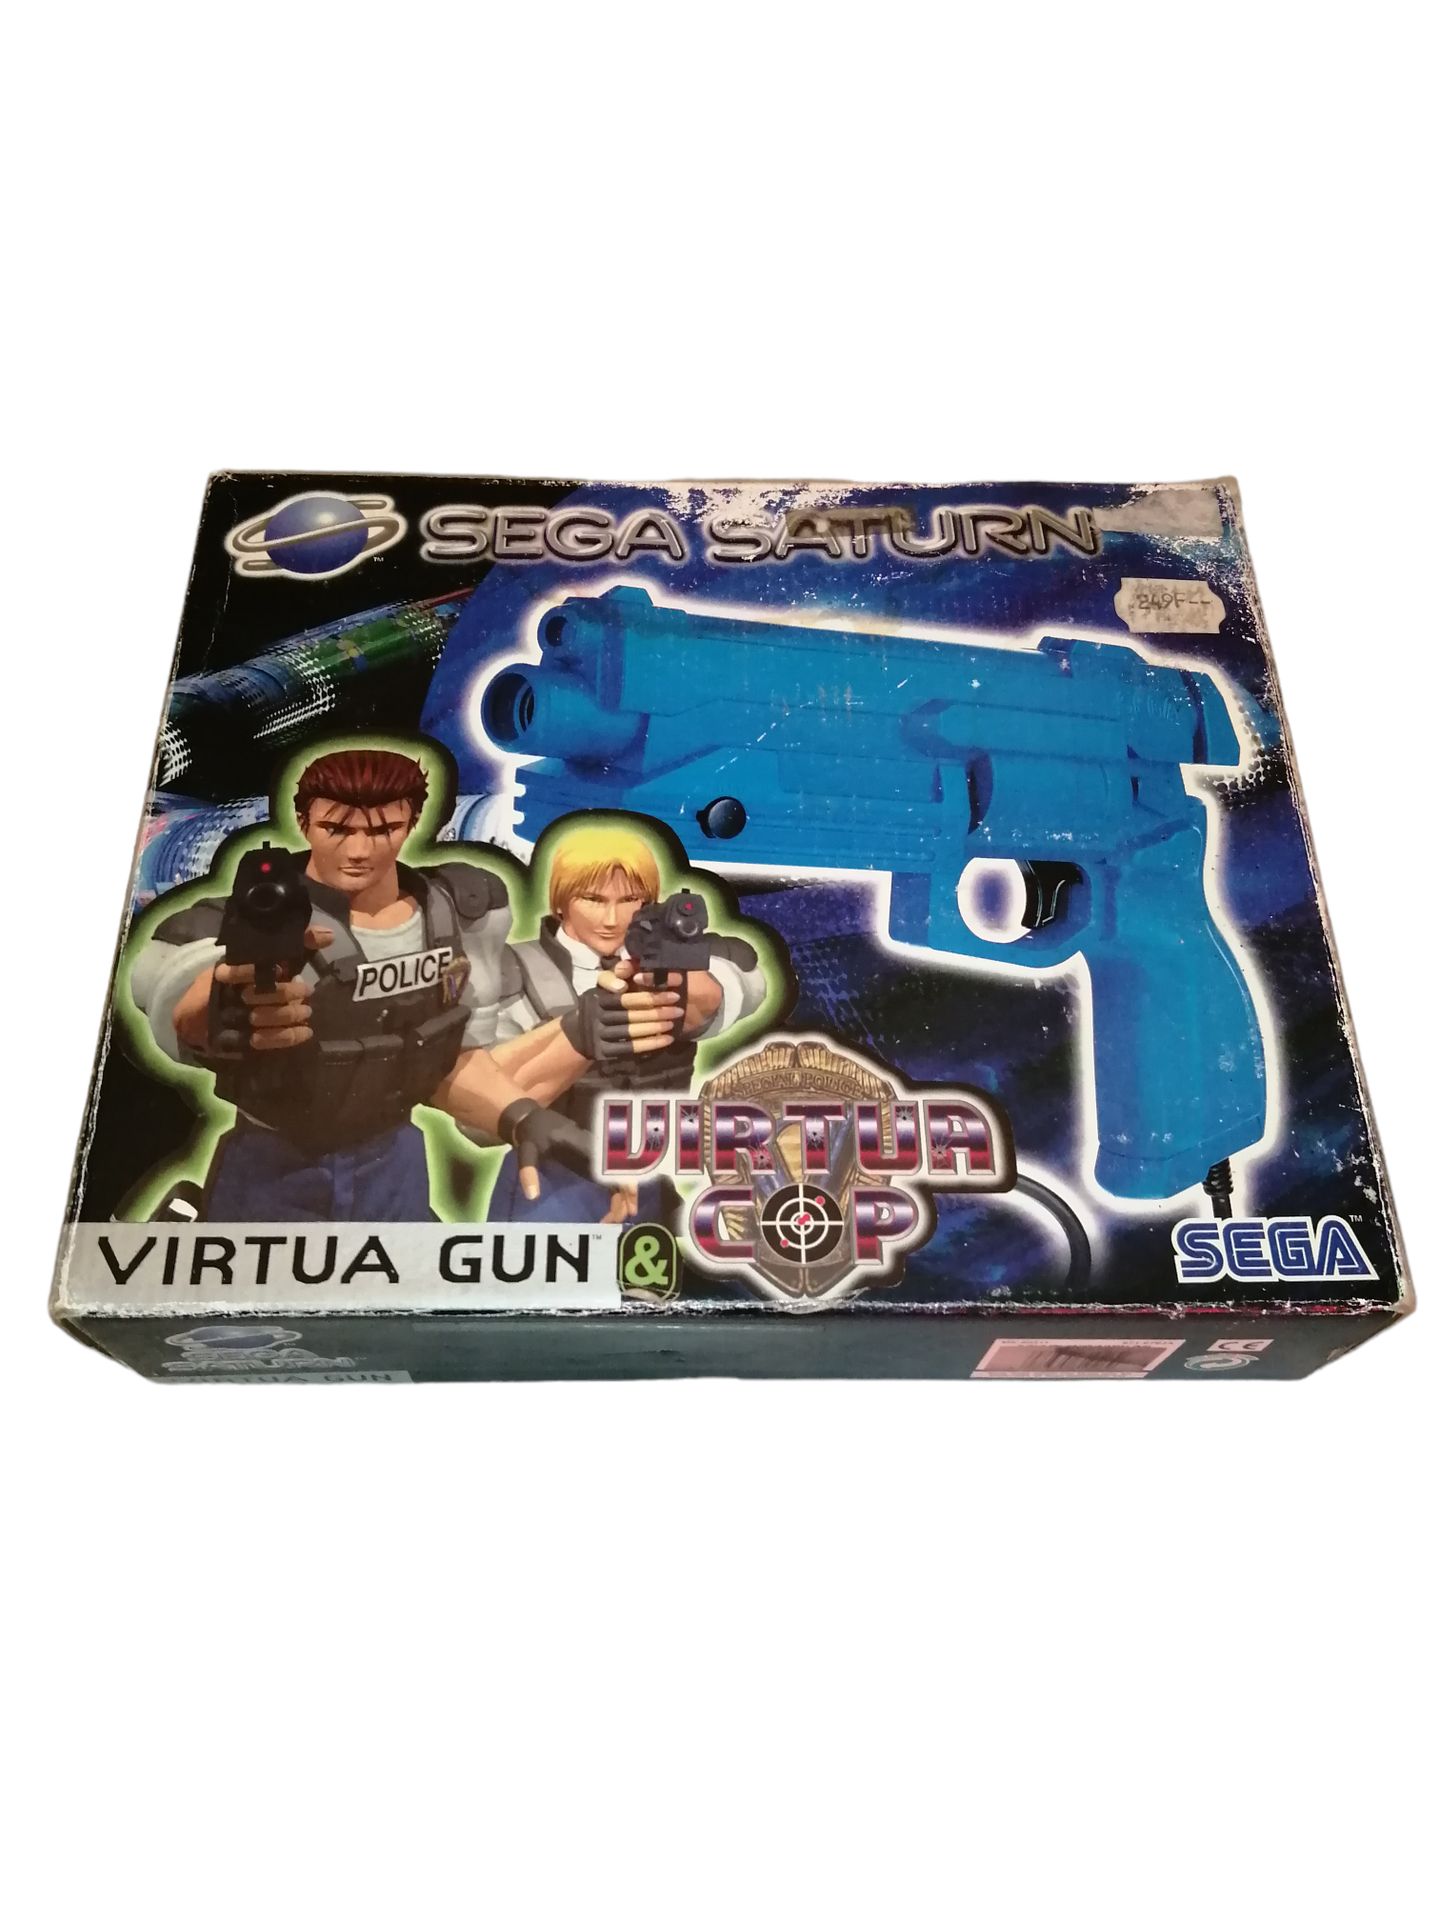 Null SEGA SATURN - Virtua Gun Virtua Cop。
包装盒破损、
内部清洁、 
楔子干净、
游戏完整、 
CD 微刮伤，但仍可使&hellip;